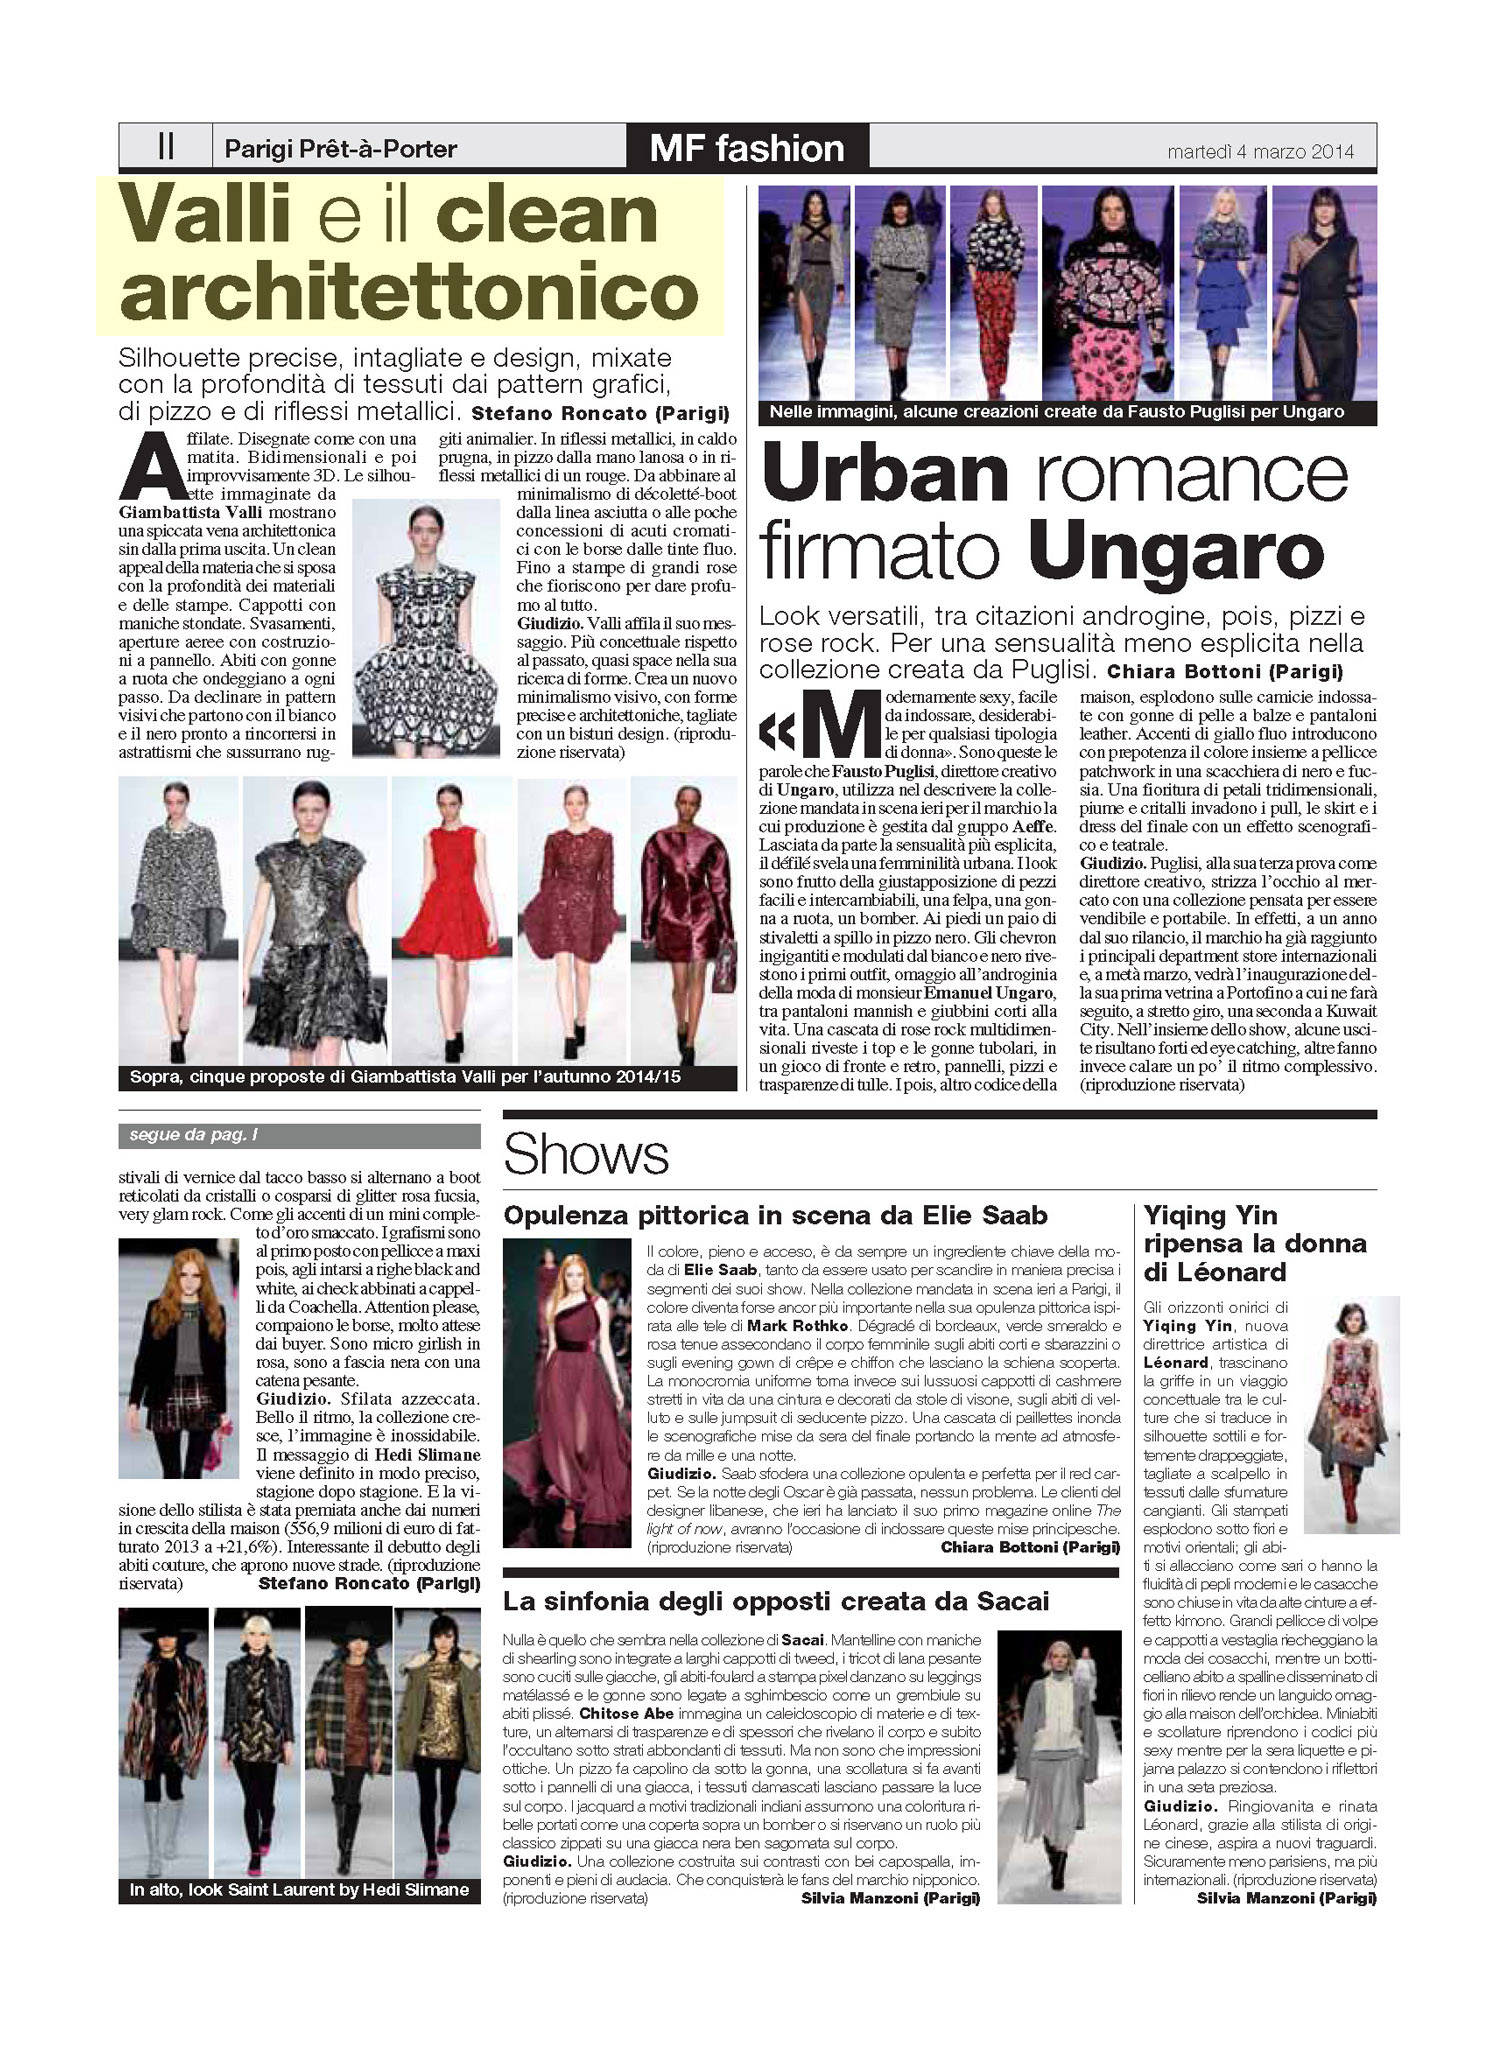 Giambattista Valli on MF Fashion, March 4th 2014 | Riccardo Grassi ...